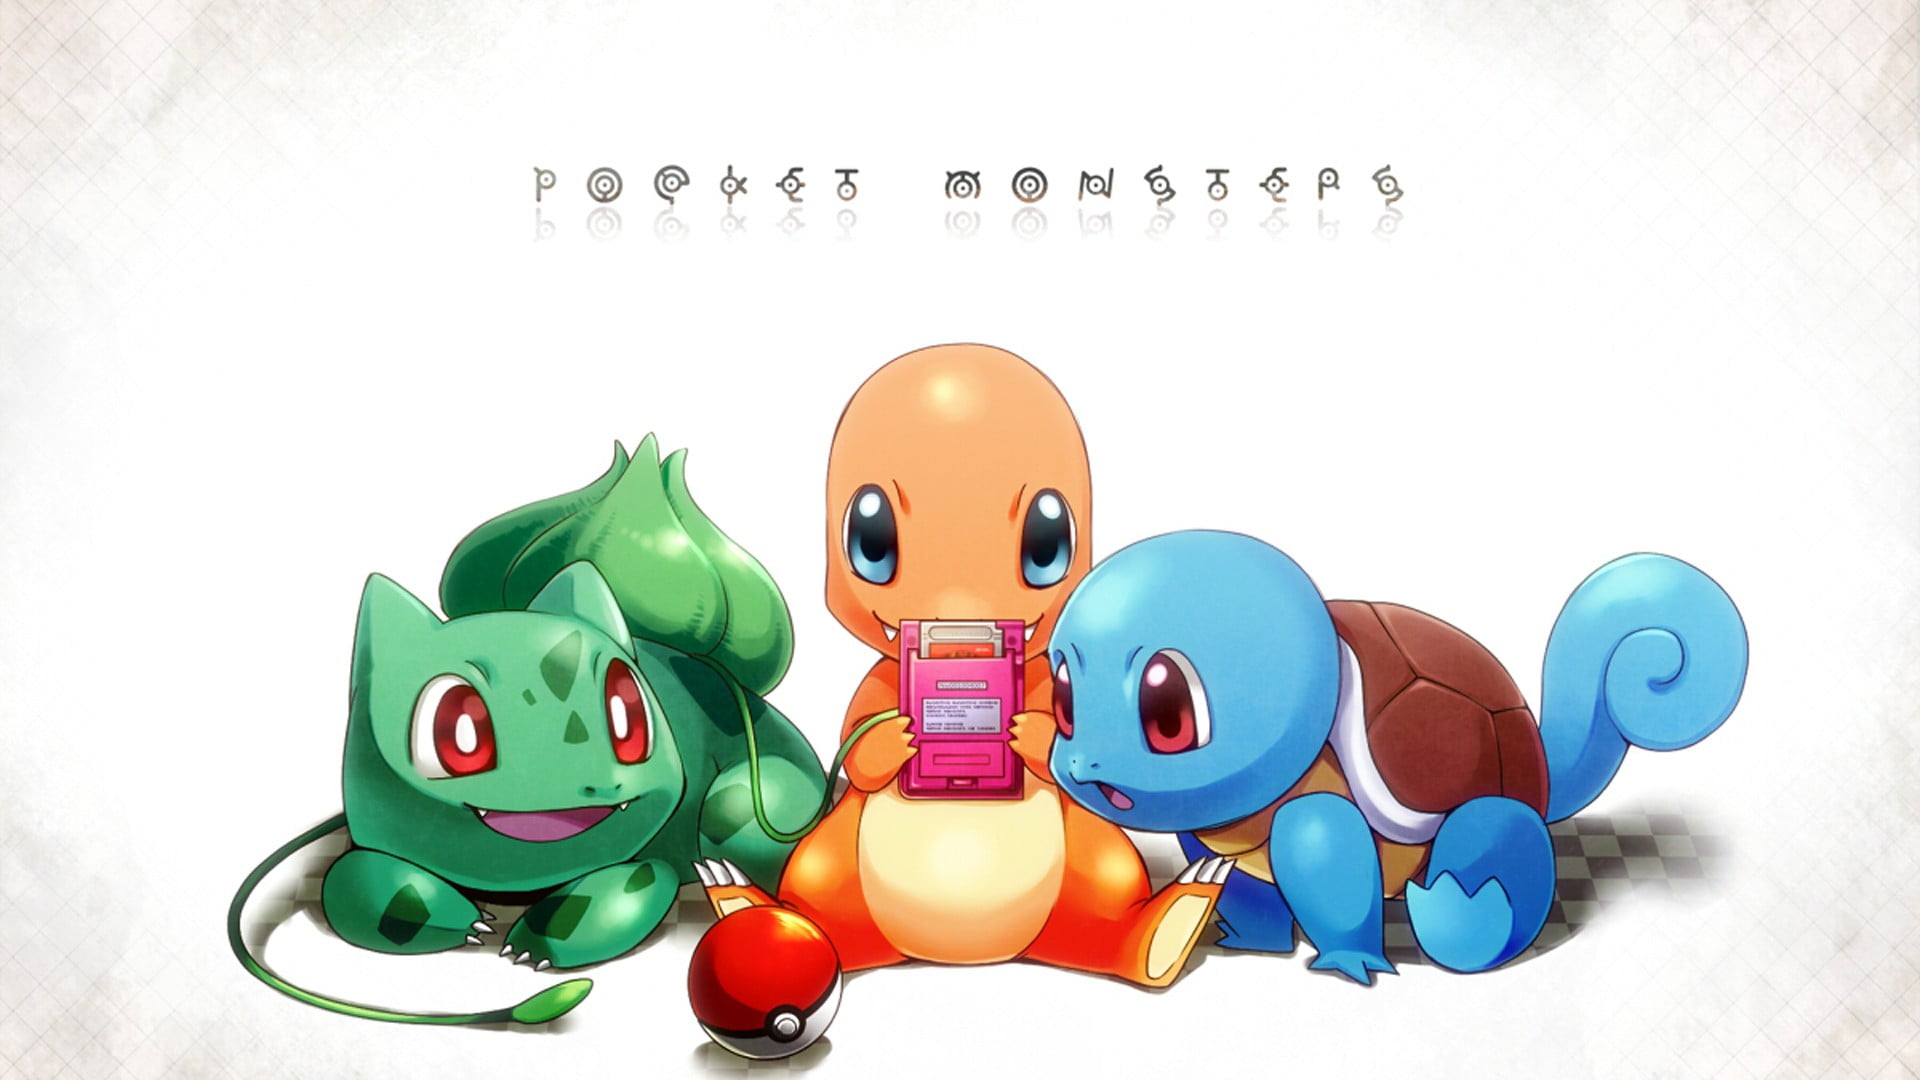 Pokemon character digital wallpaper, Pokémon, Squirtle, Bulbasaur